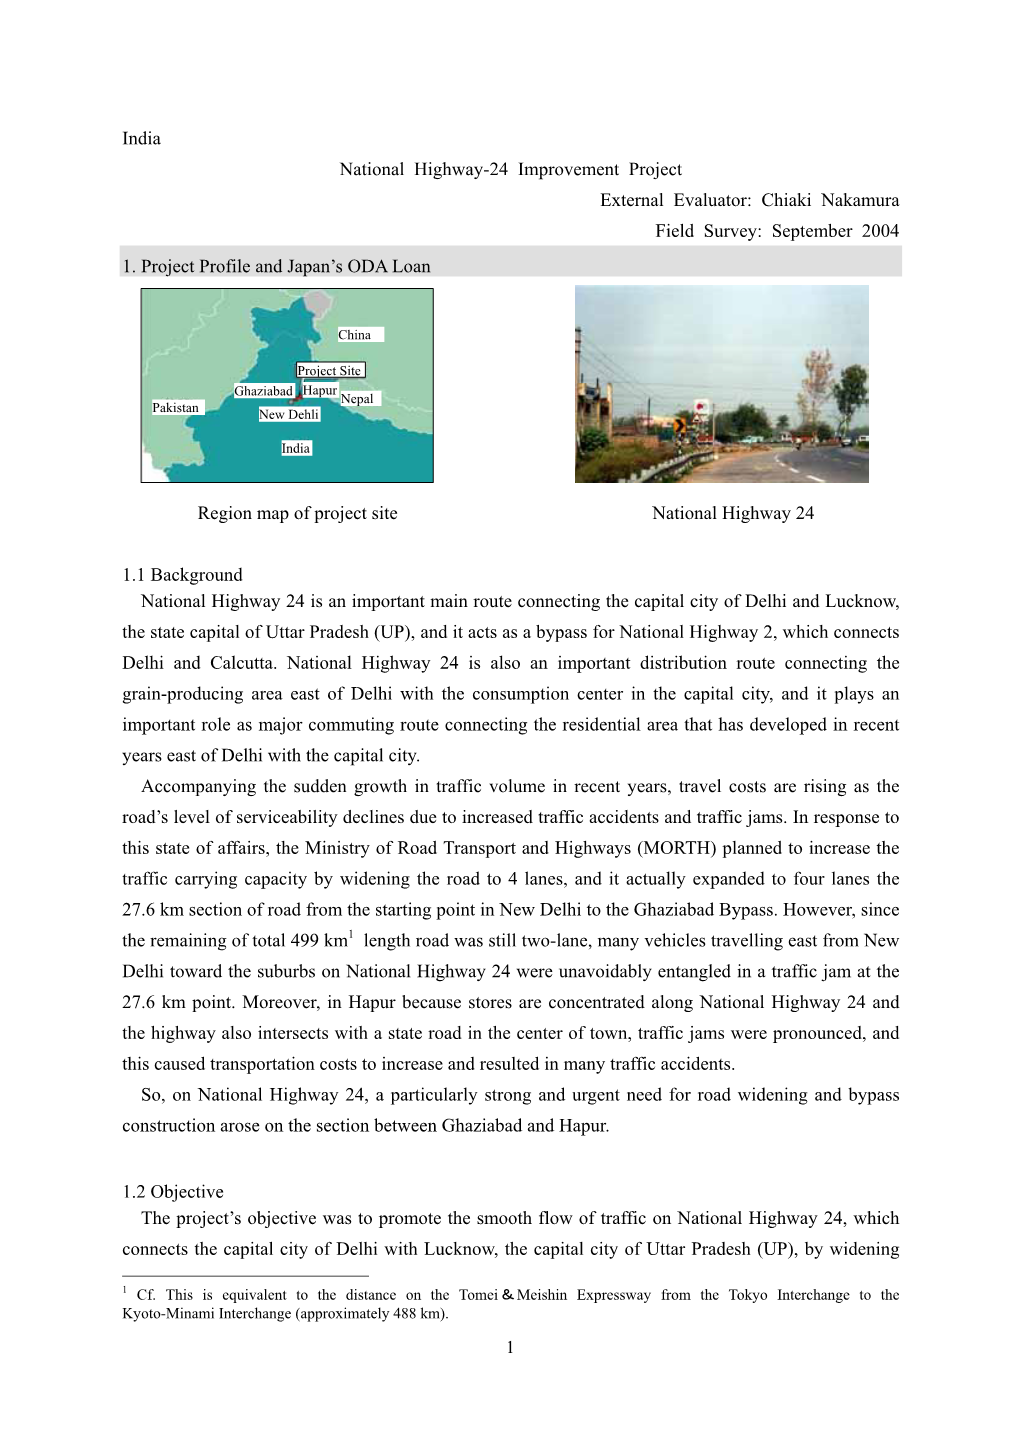 India National Highway-24 Improvement Project External Evaluator: Chiaki Nakamura Field Survey: September 2004 1